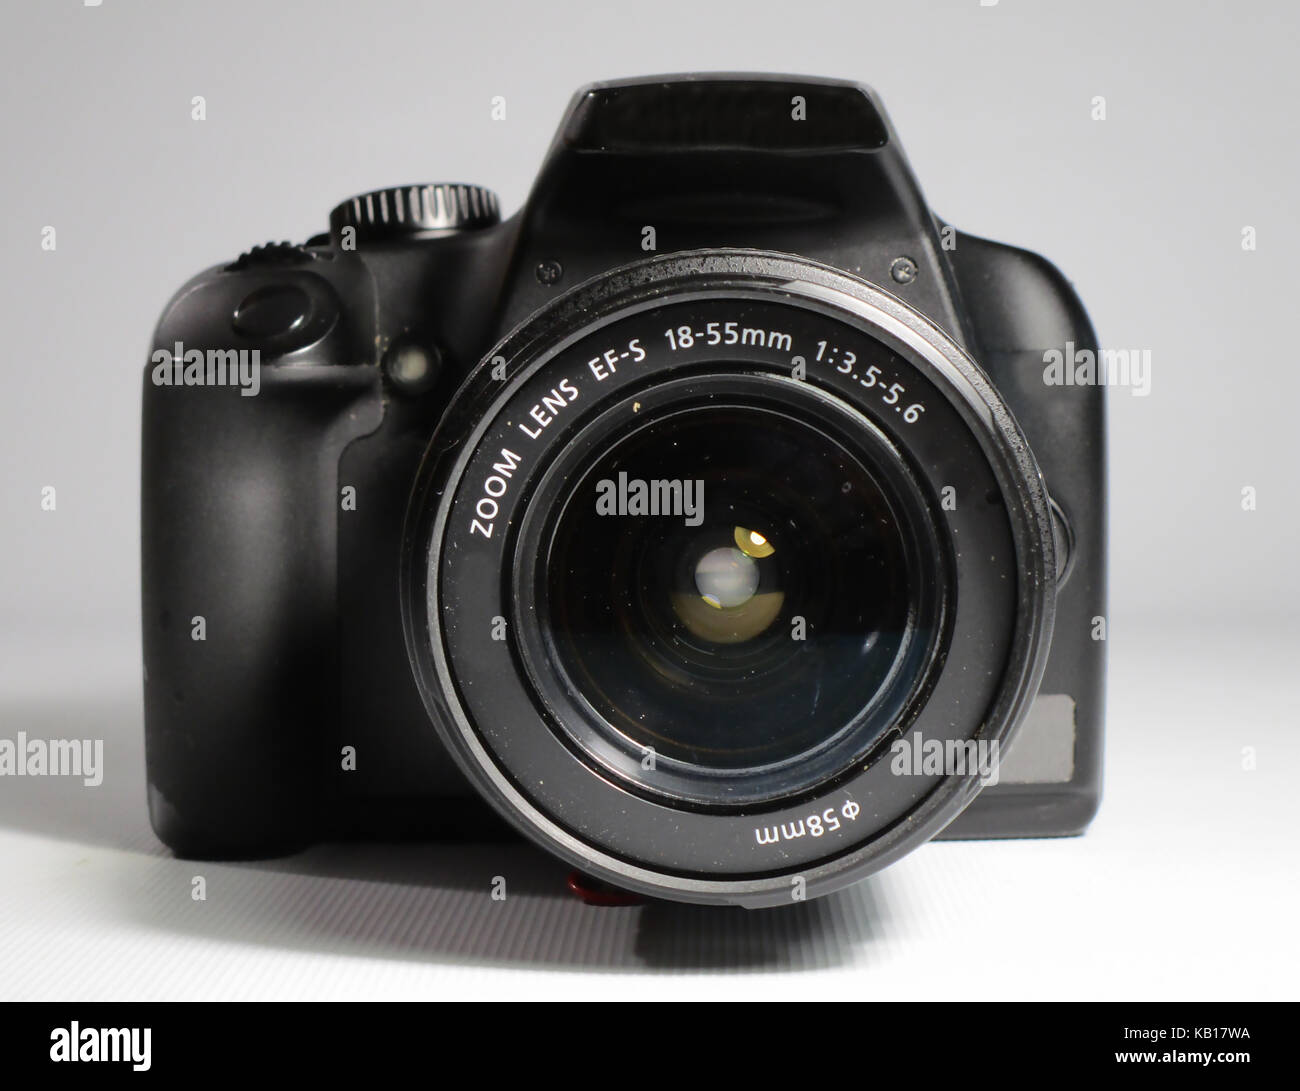 Digital reflex camera Stock Photo